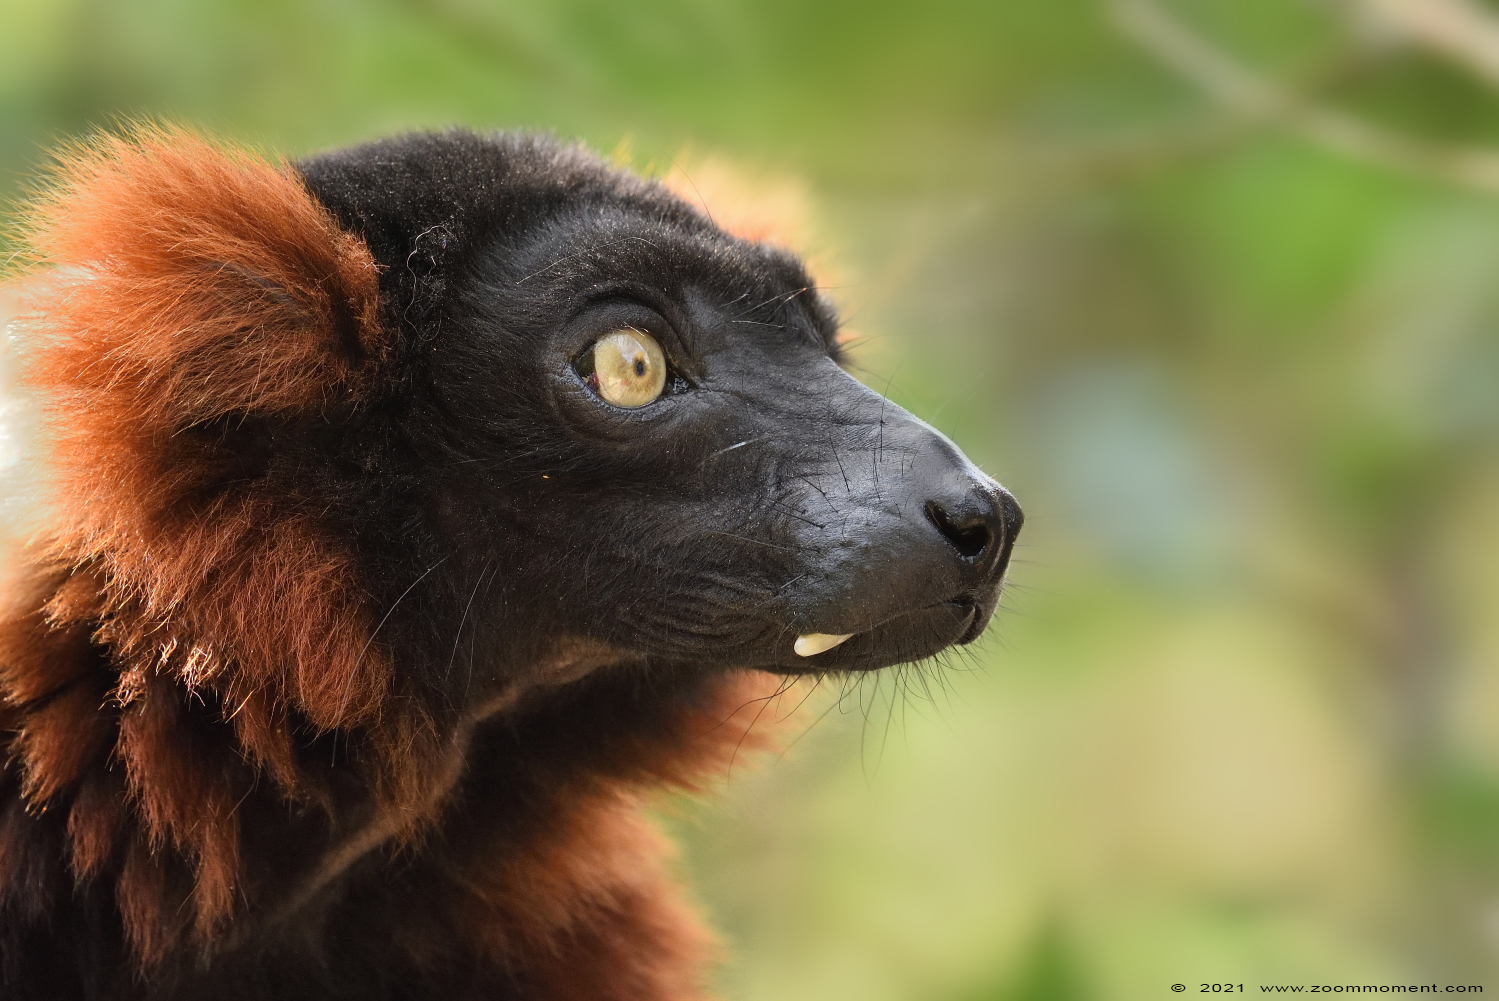 rode vari ( Varecia variegata rubra ) red ruffed lemur
Trefwoorden: Safaripark Beekse Bergen rode vari Varecia variegata rubra red ruffed lemur